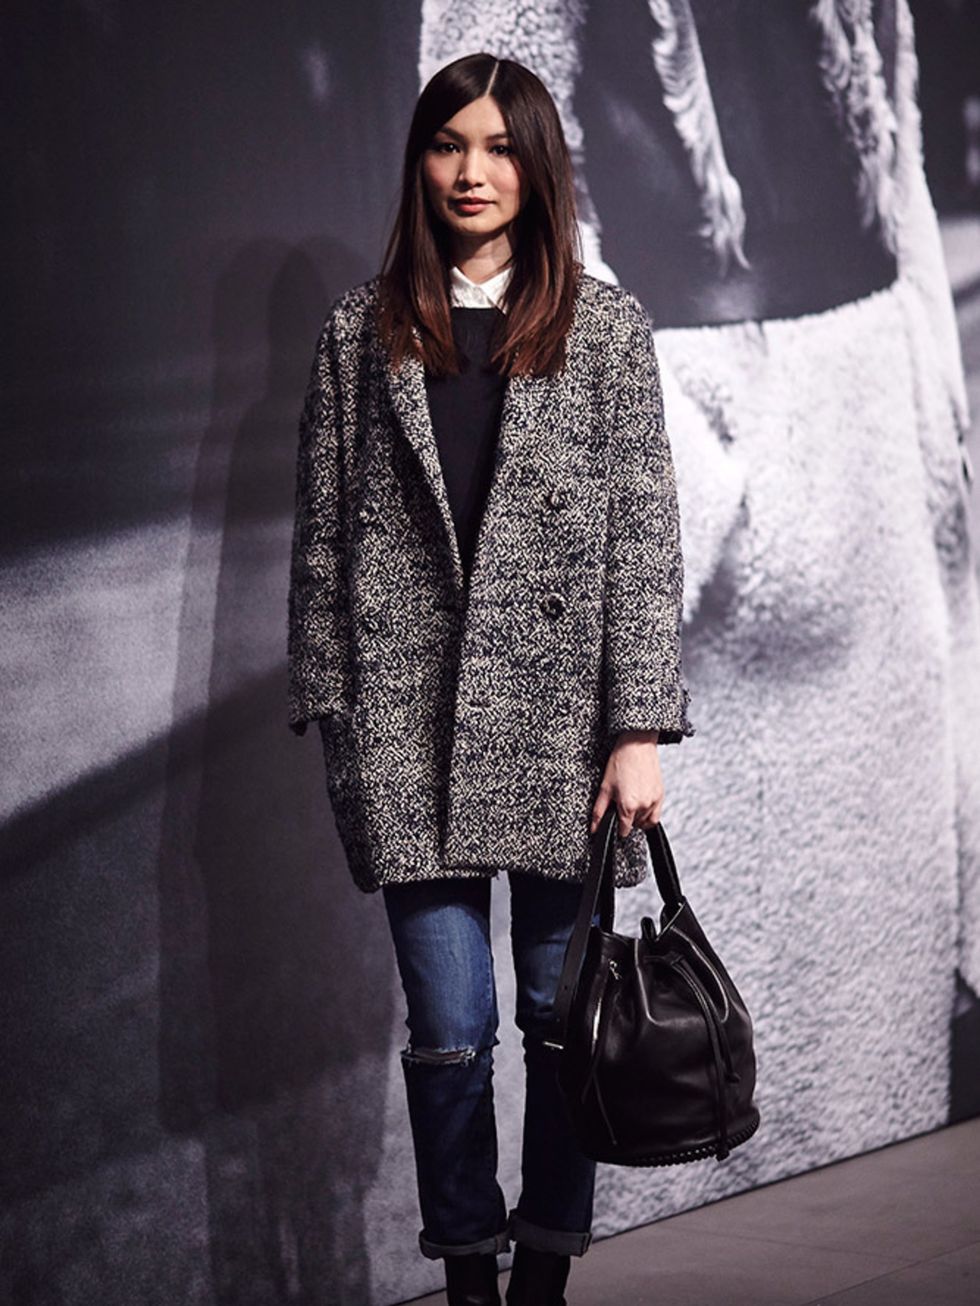 Gemma Chan carrying AllSaints bag at the London Fashion Week.